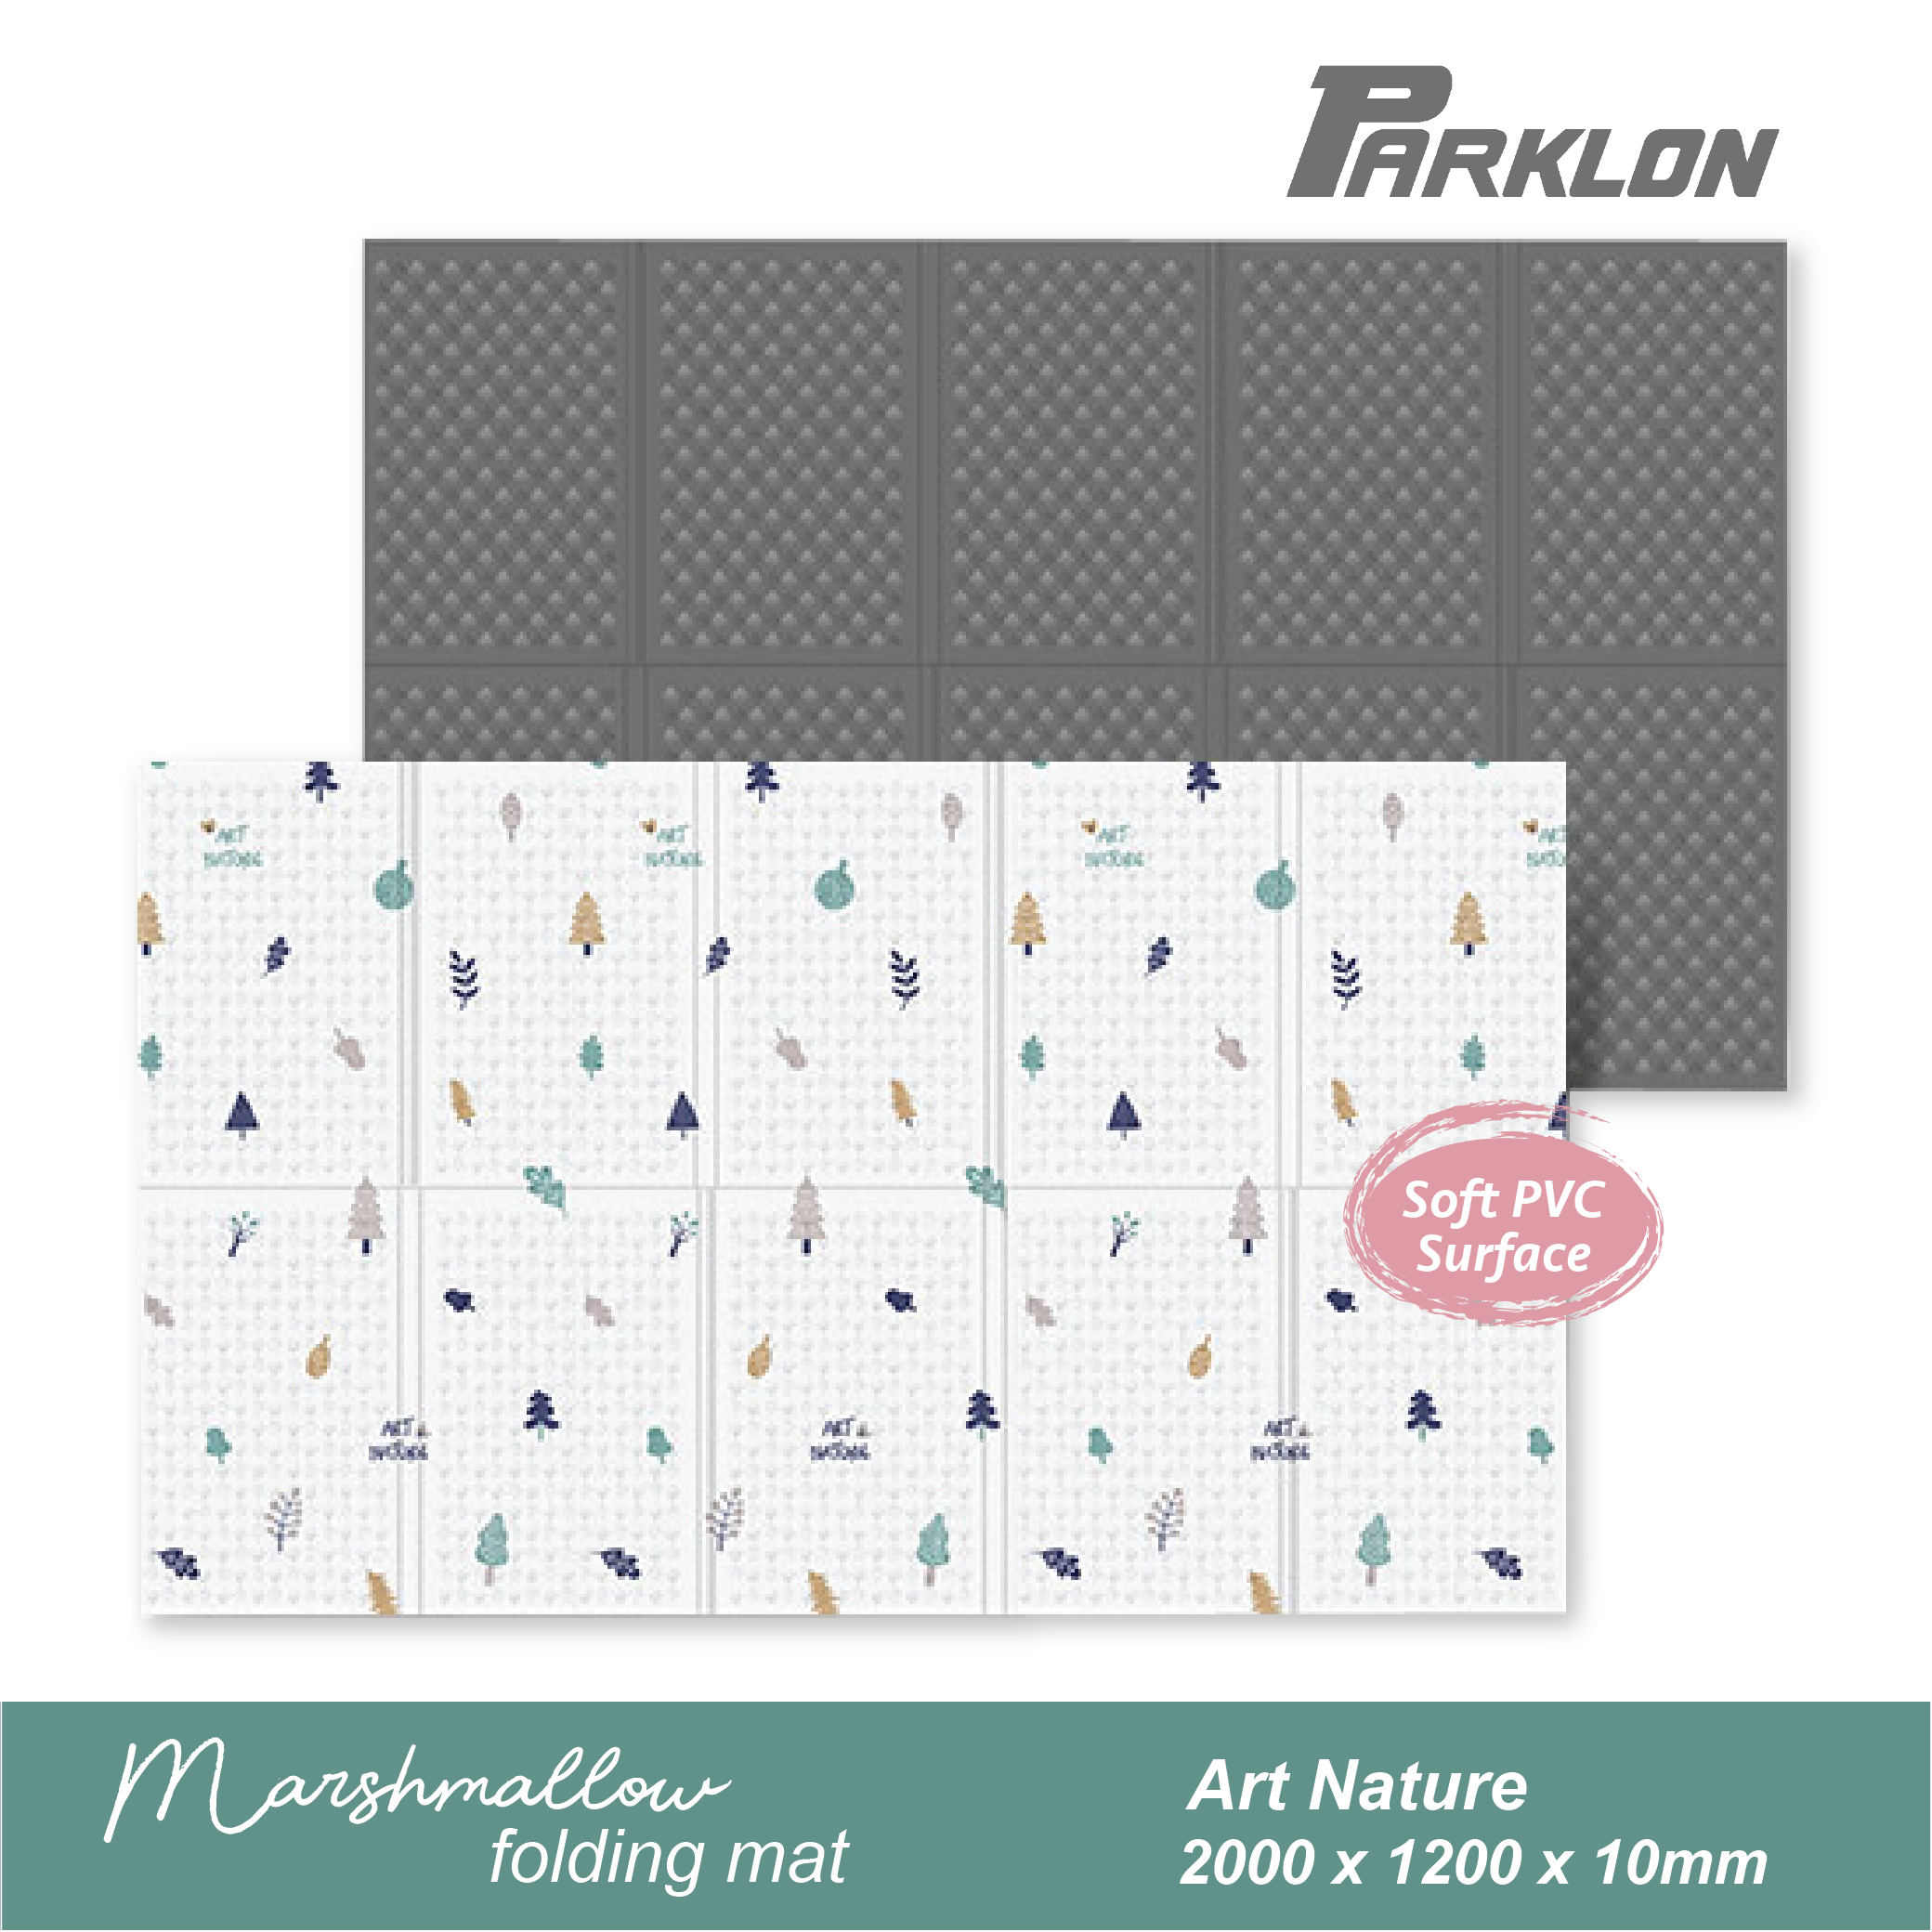 Parklon Marshmallow Folding Playmat (Art Nature design)